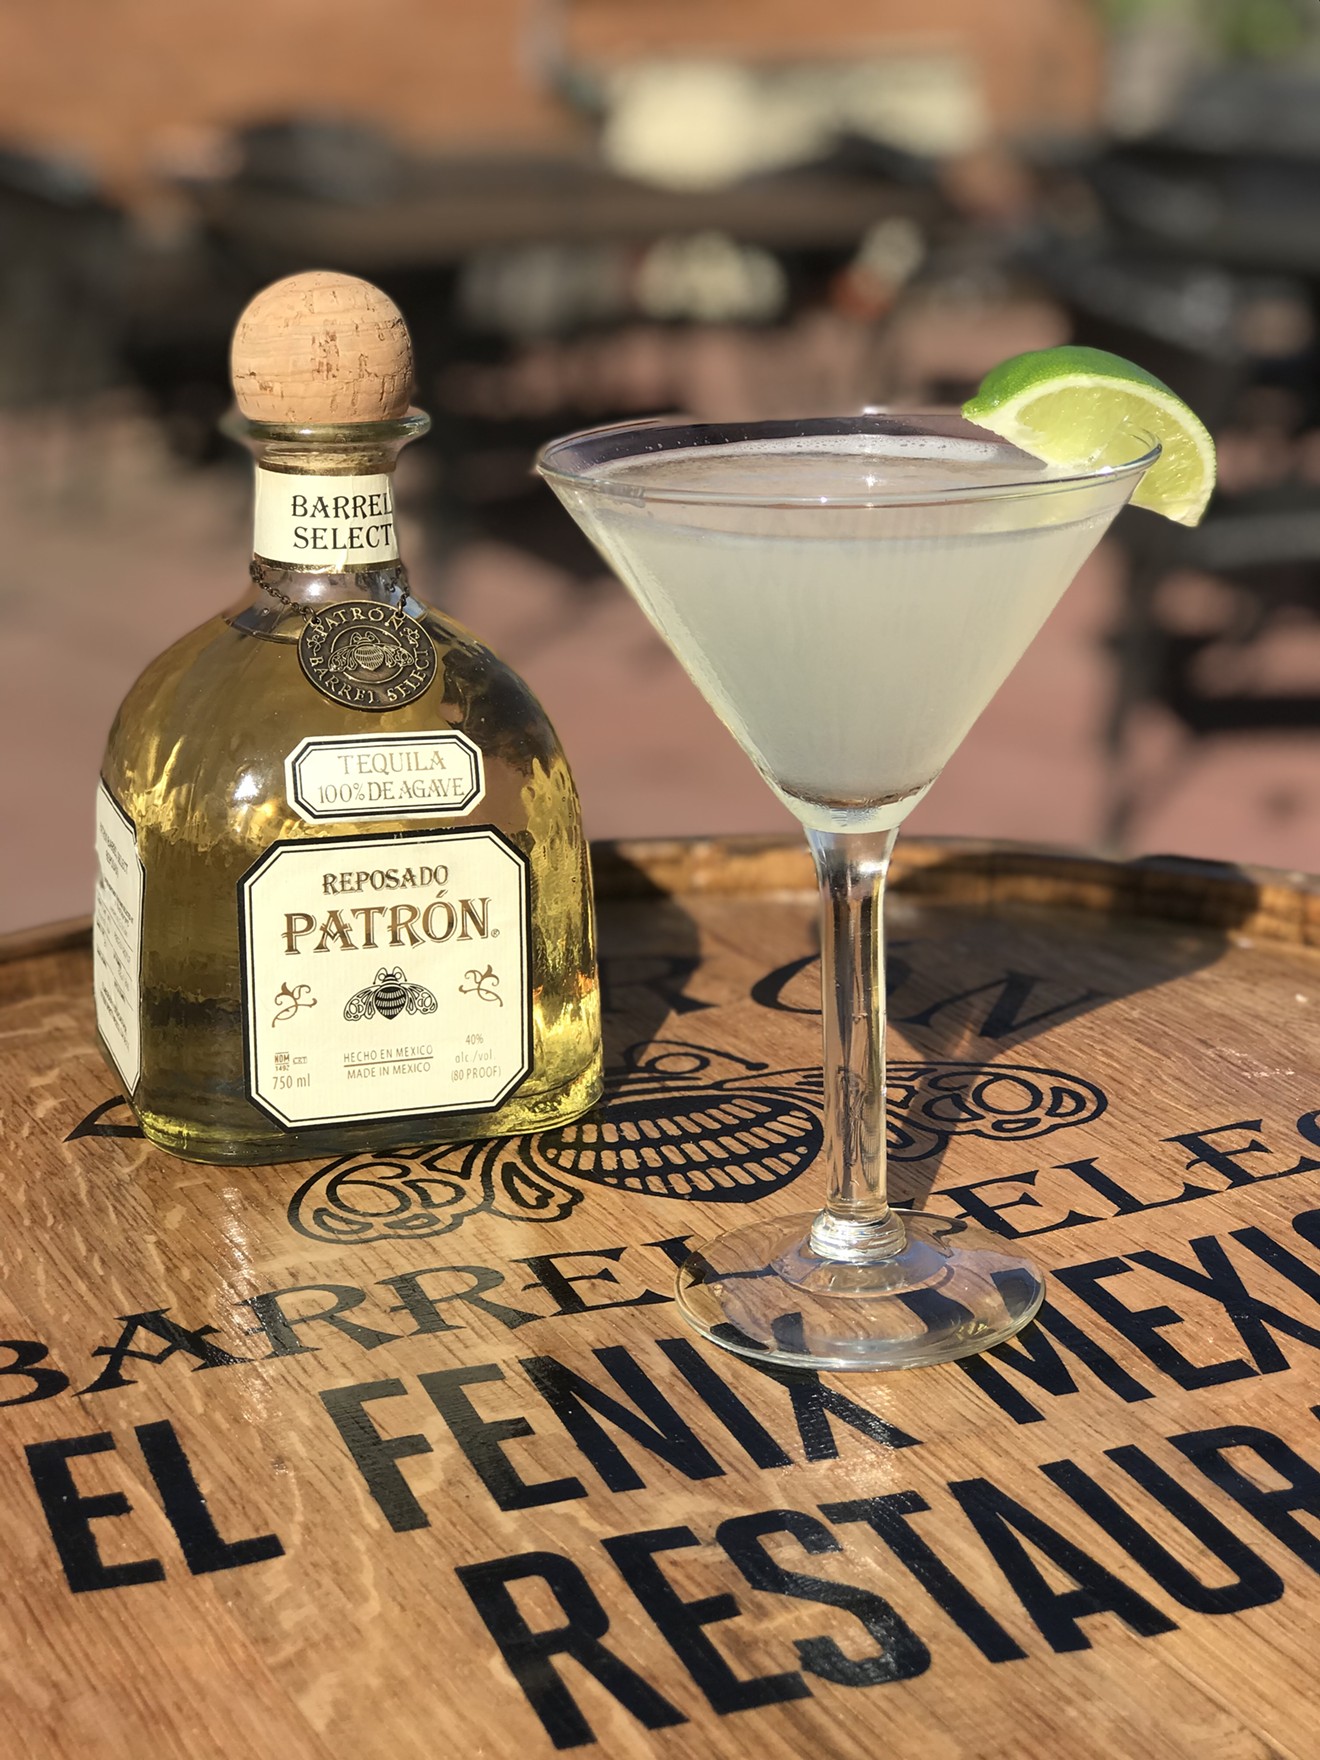 El Fenix selected their own Centennial Reserve Patrón Reposado Tequila.